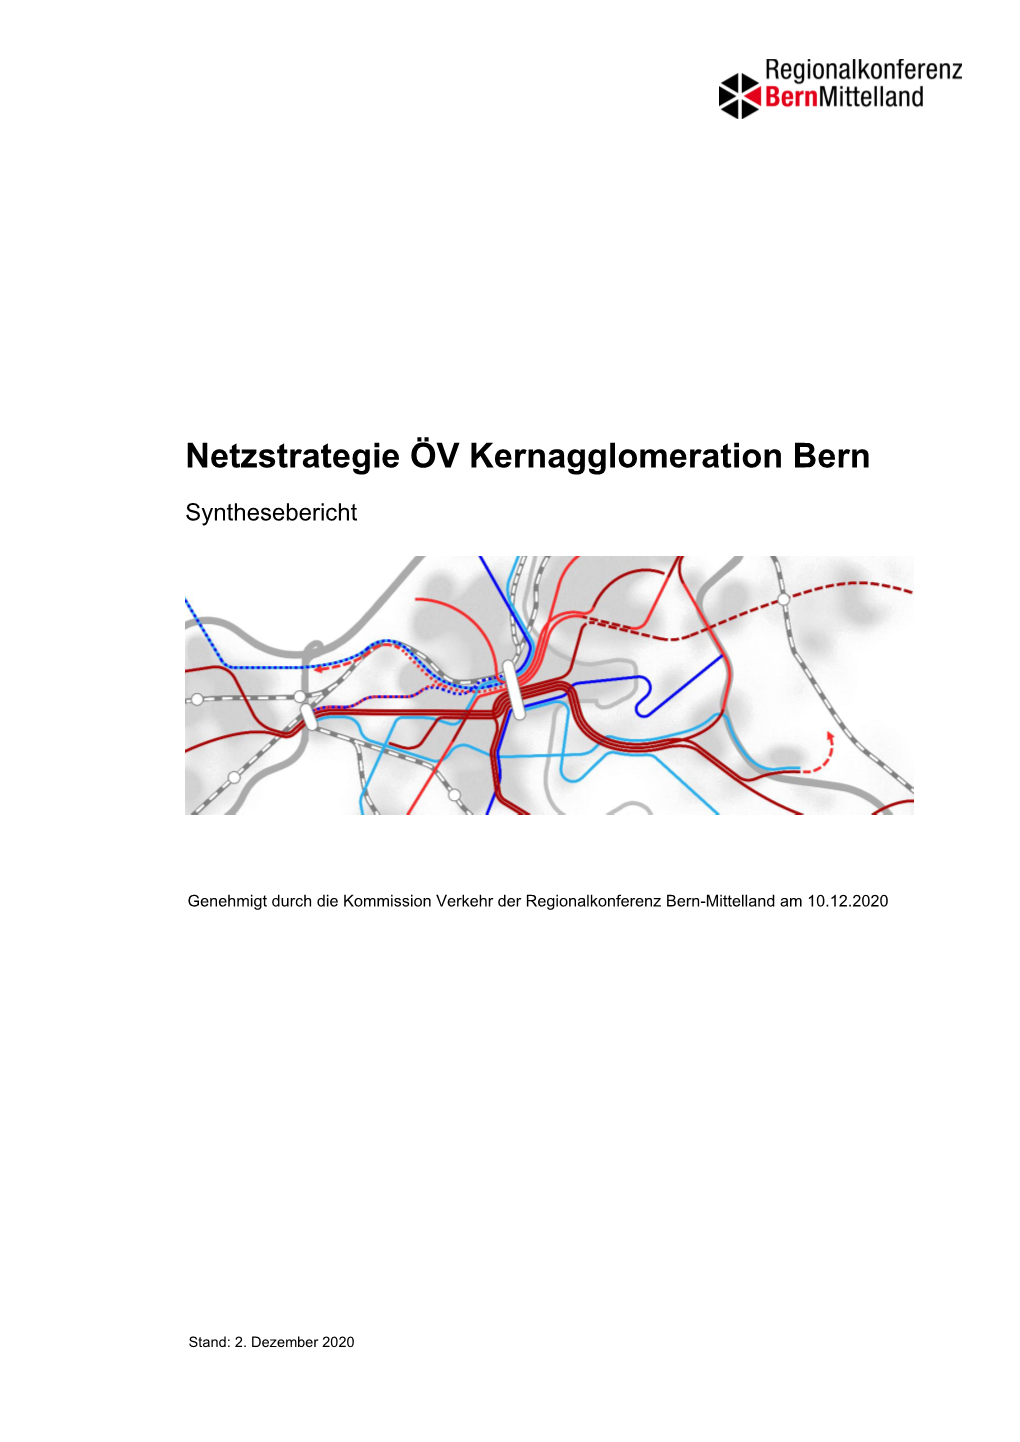 Netzstrategie ÖV Kernagglomeration Bern, Synthesebericht